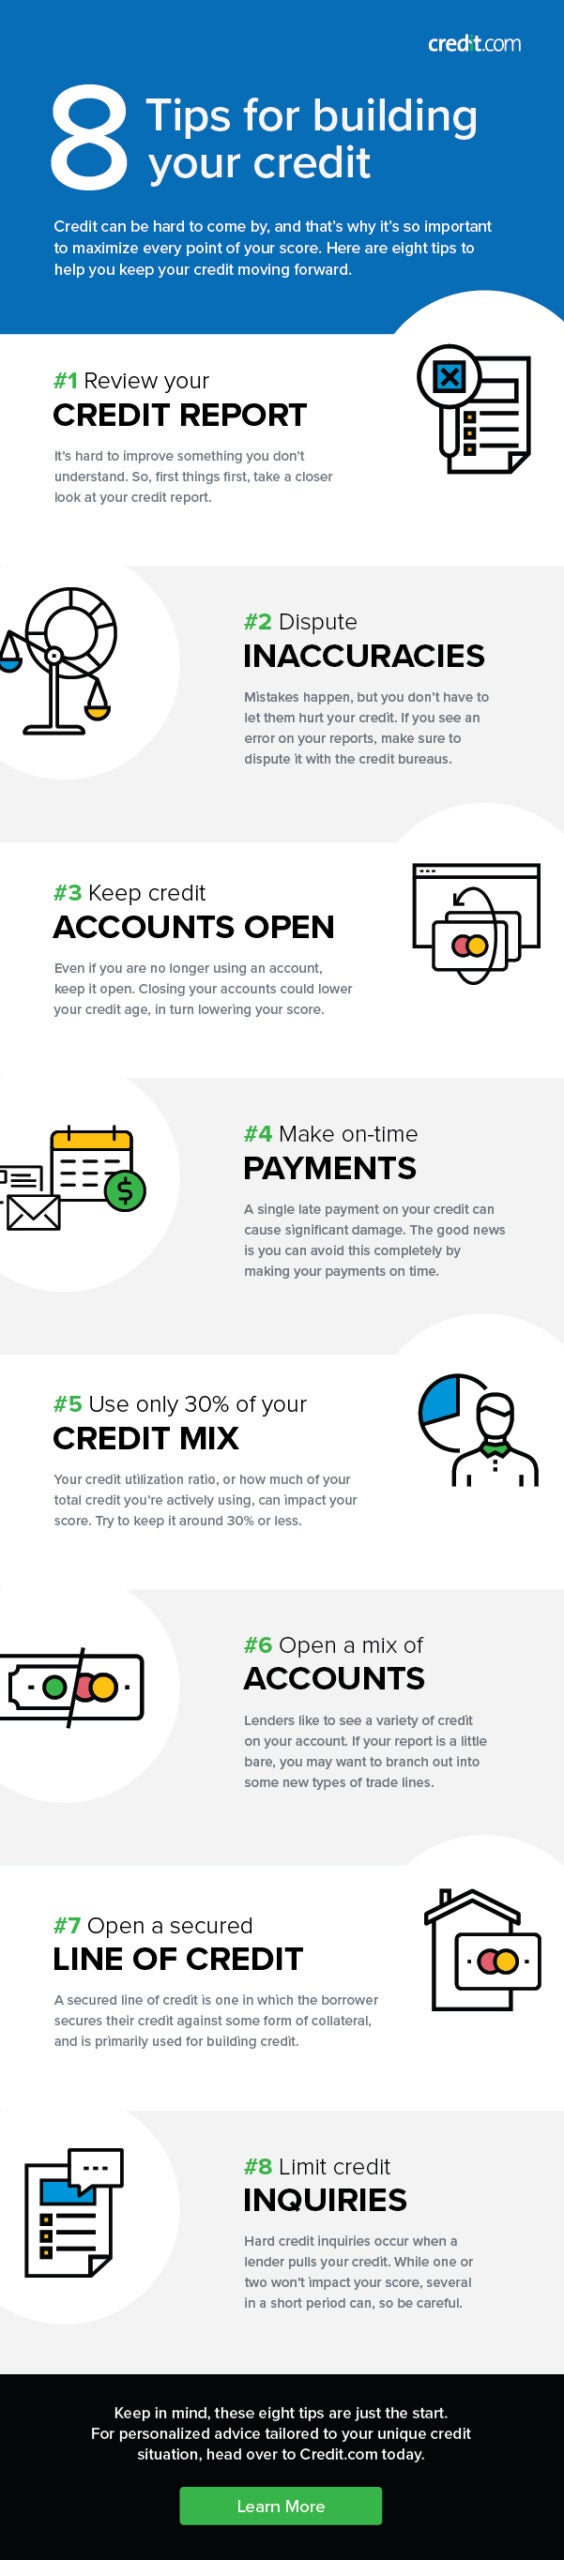 Credit Tips